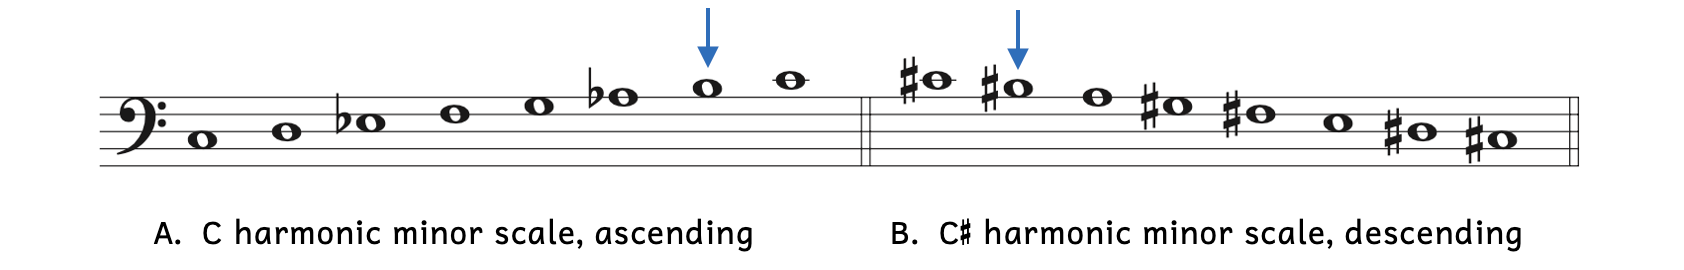 Step three. Raise the leading tone. Example A raises the leading tone by removing the flat on B. Example B raises the leading tone by adding a sharp on B.